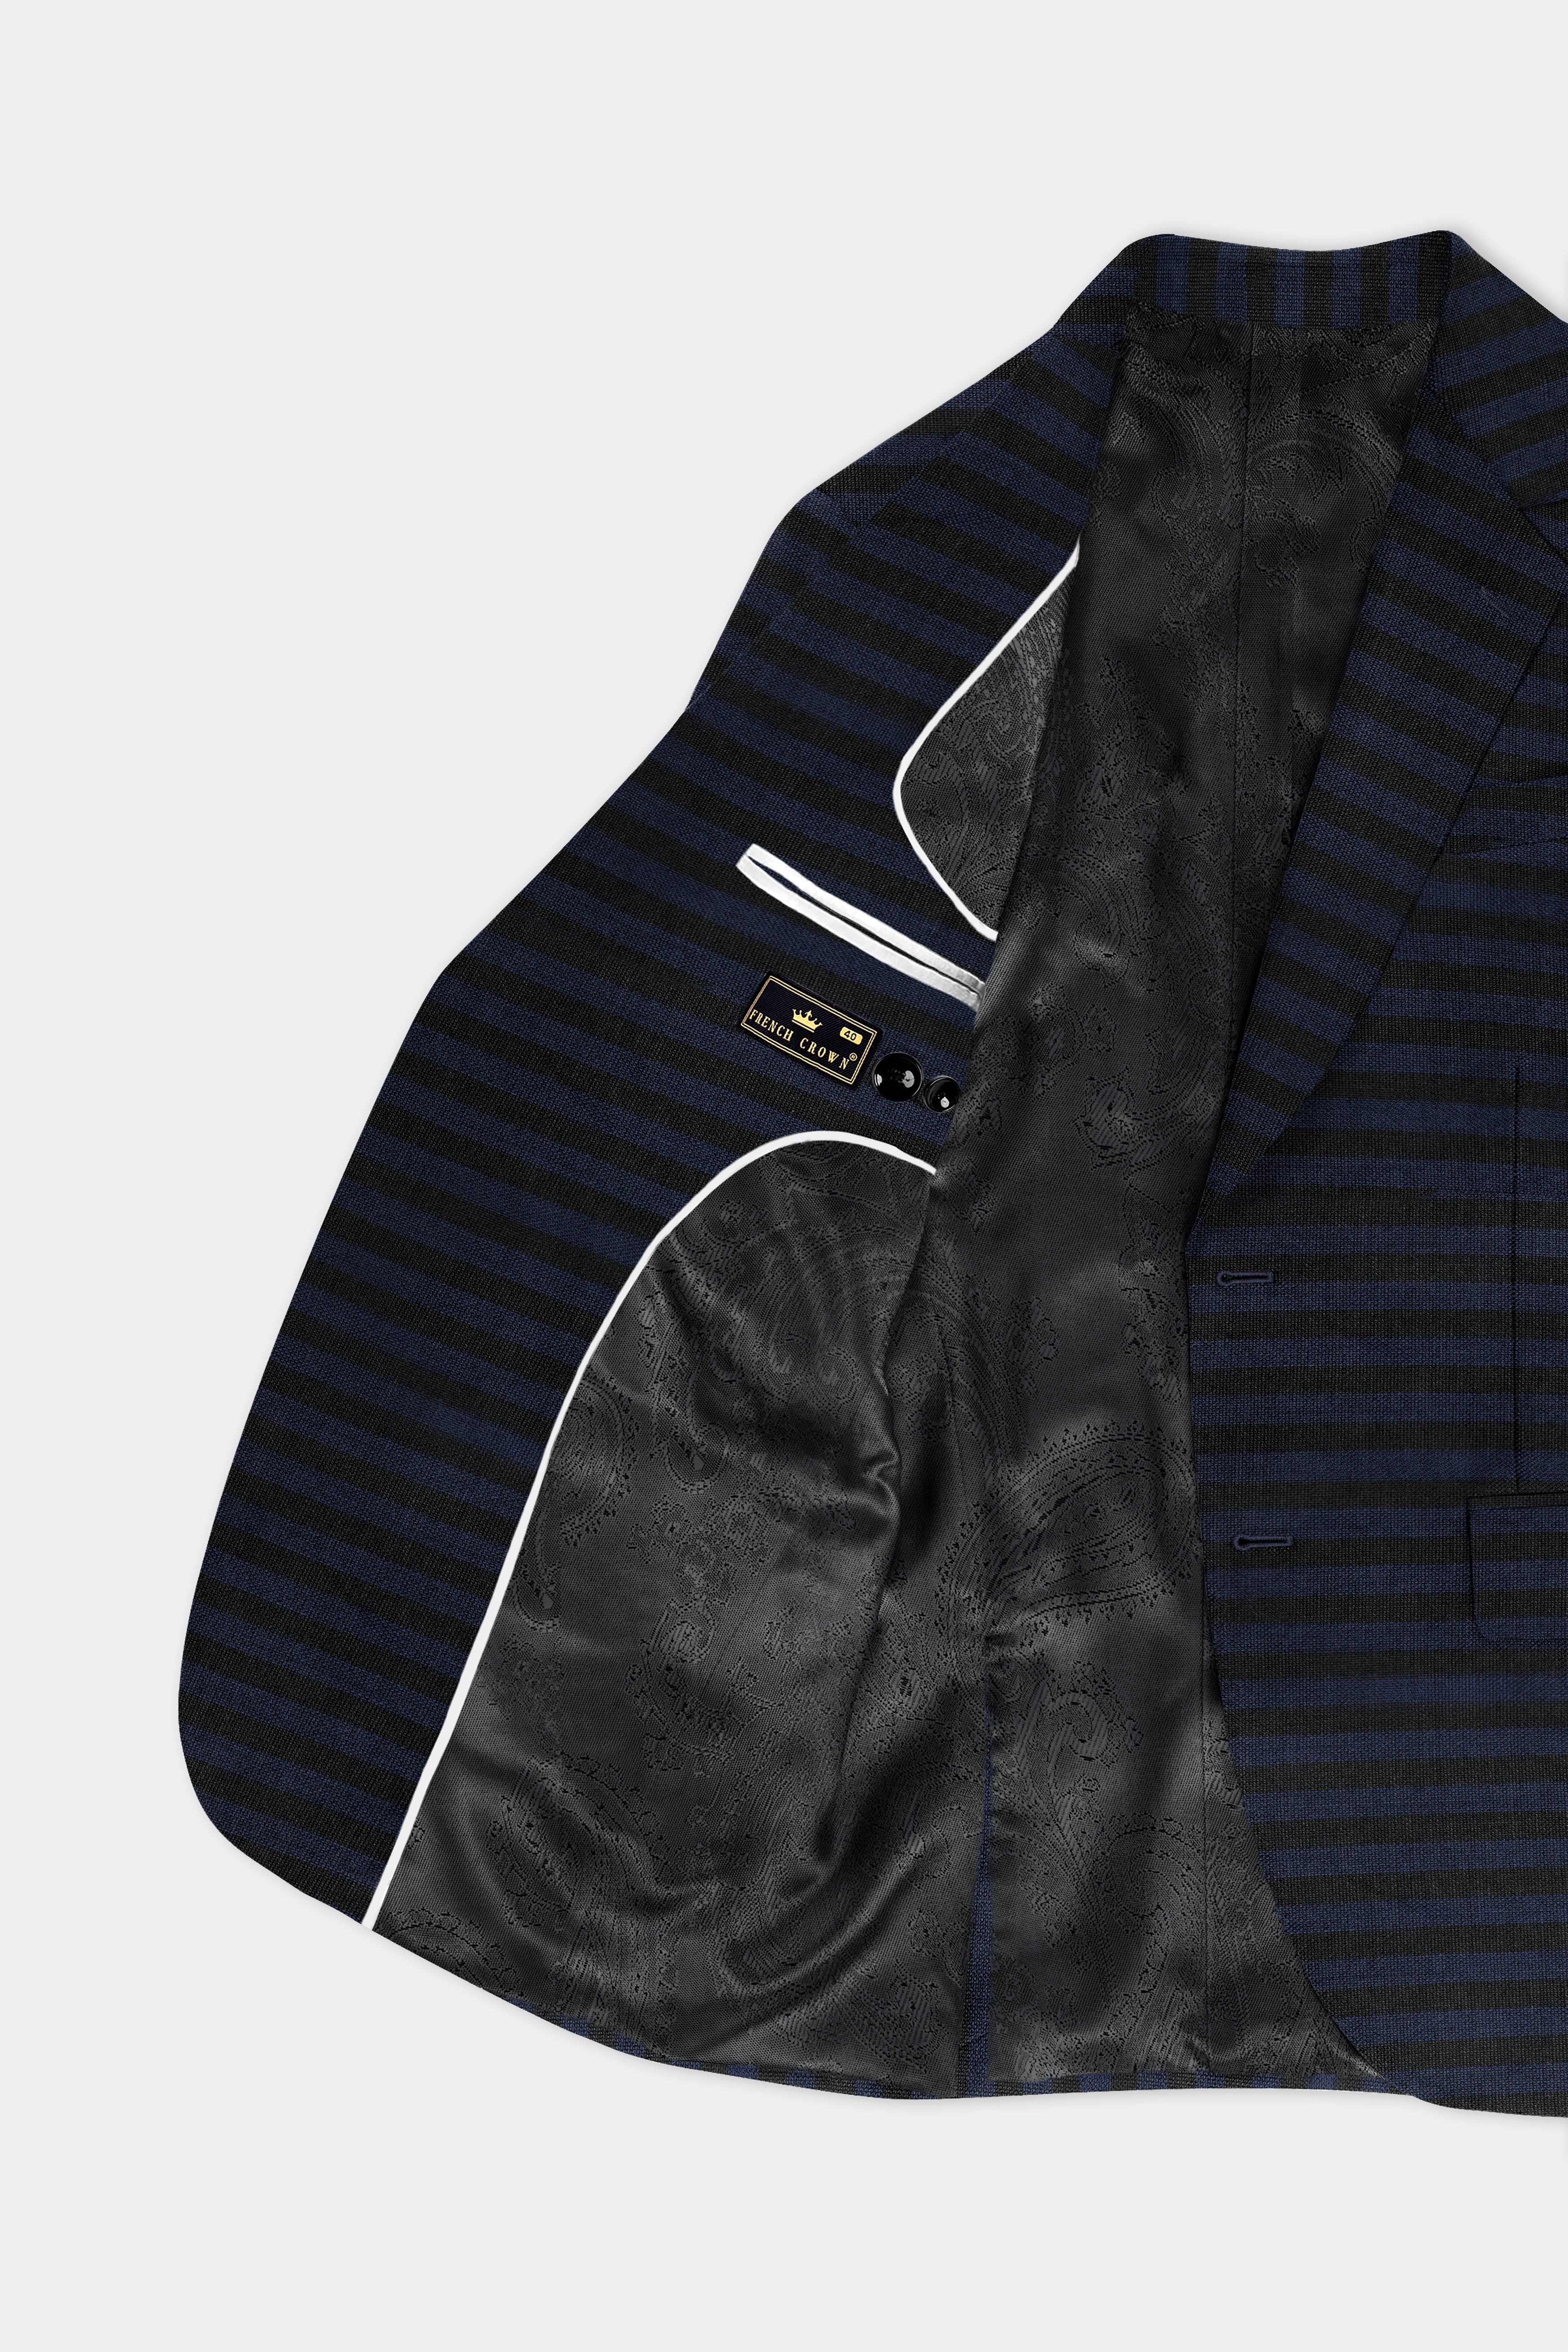 Mirage Blue and Black Striped Wool Blend Blazer